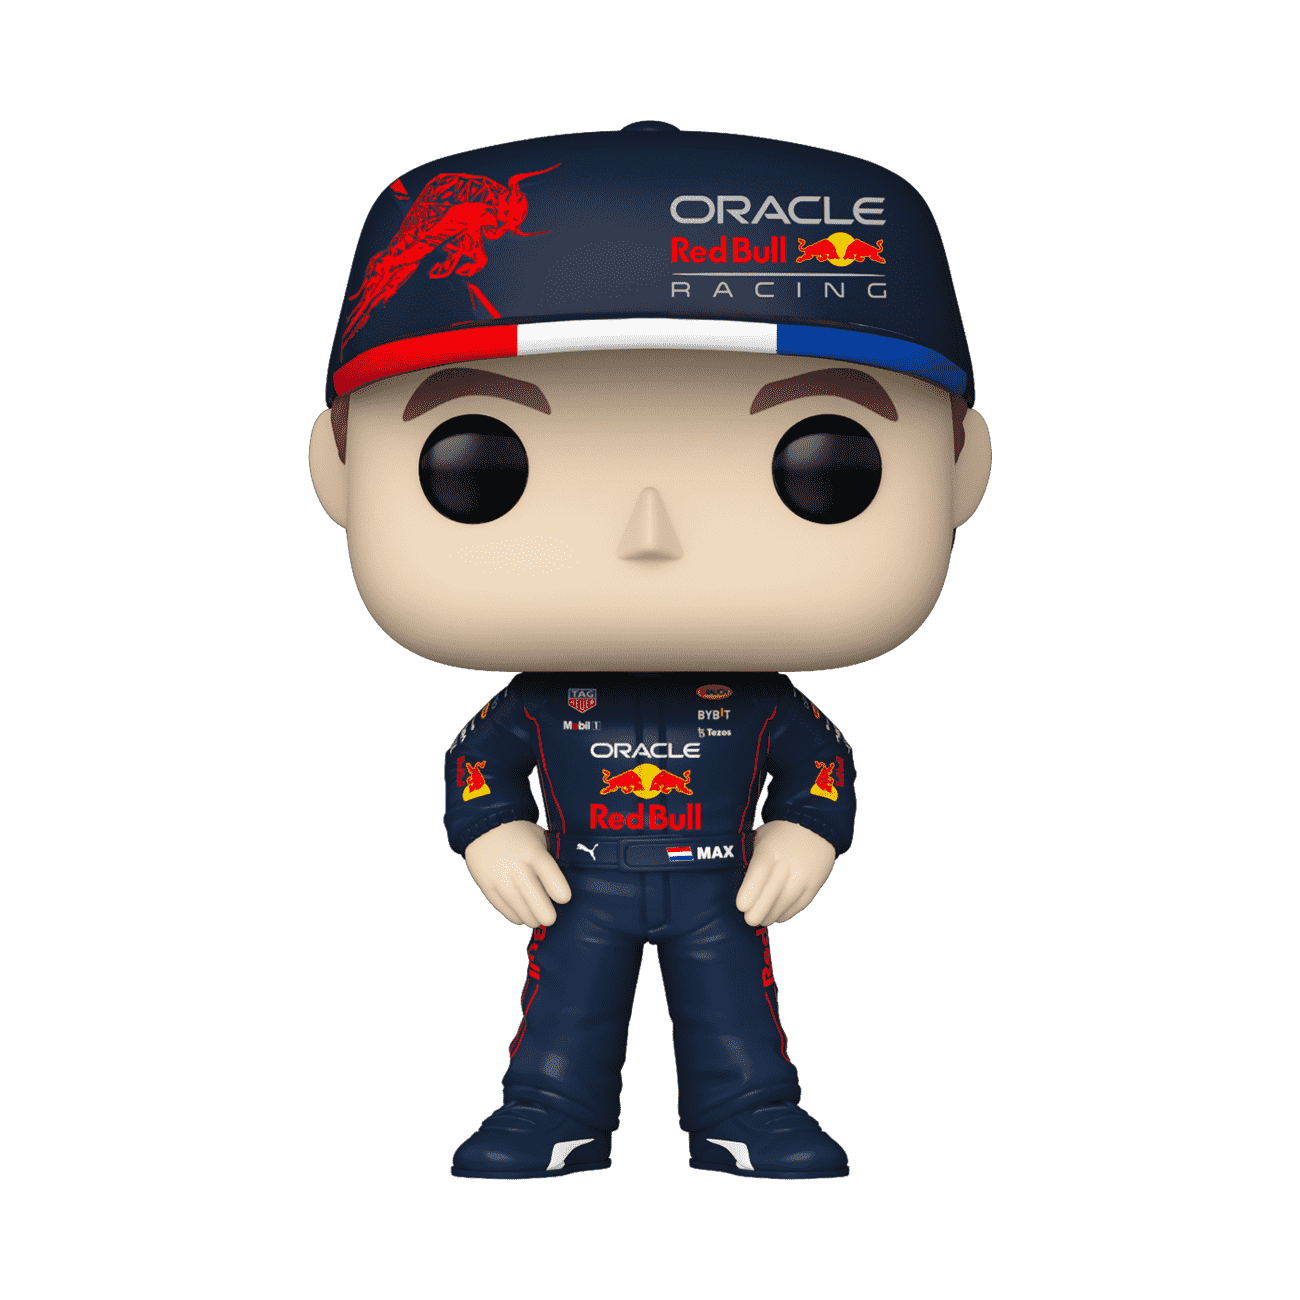 Max Verstappen Autographed Formula 1 Redbull Racing Funko Pop